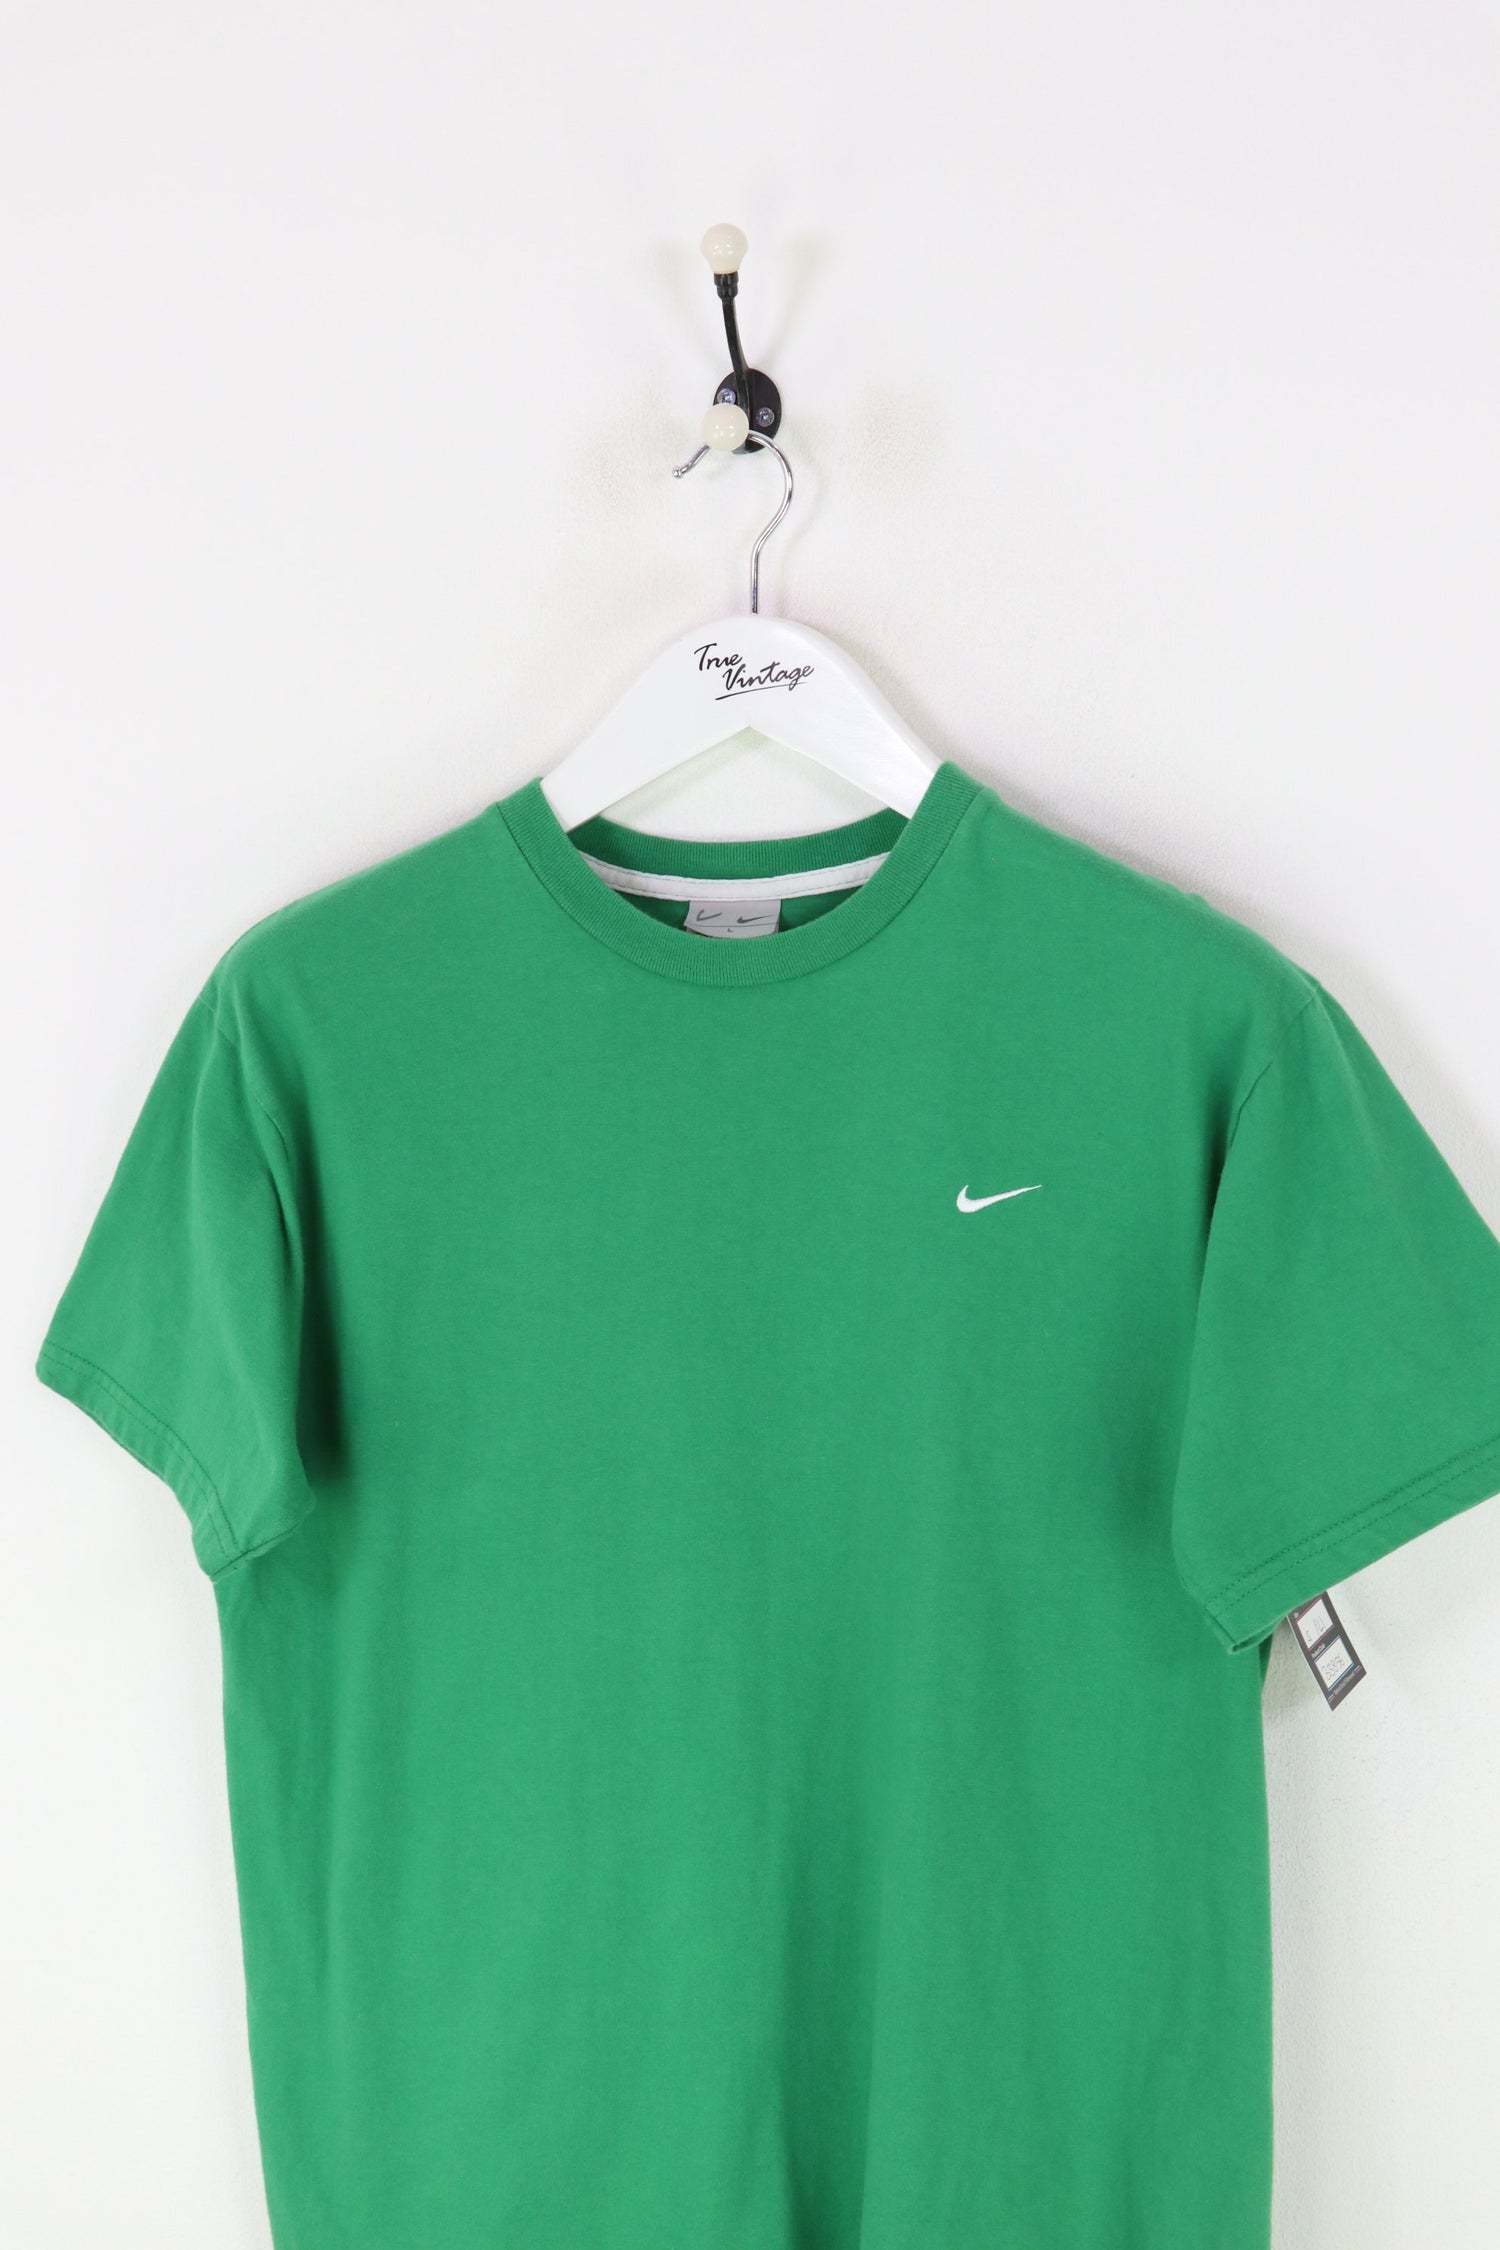 Nike T-shirt Green Small